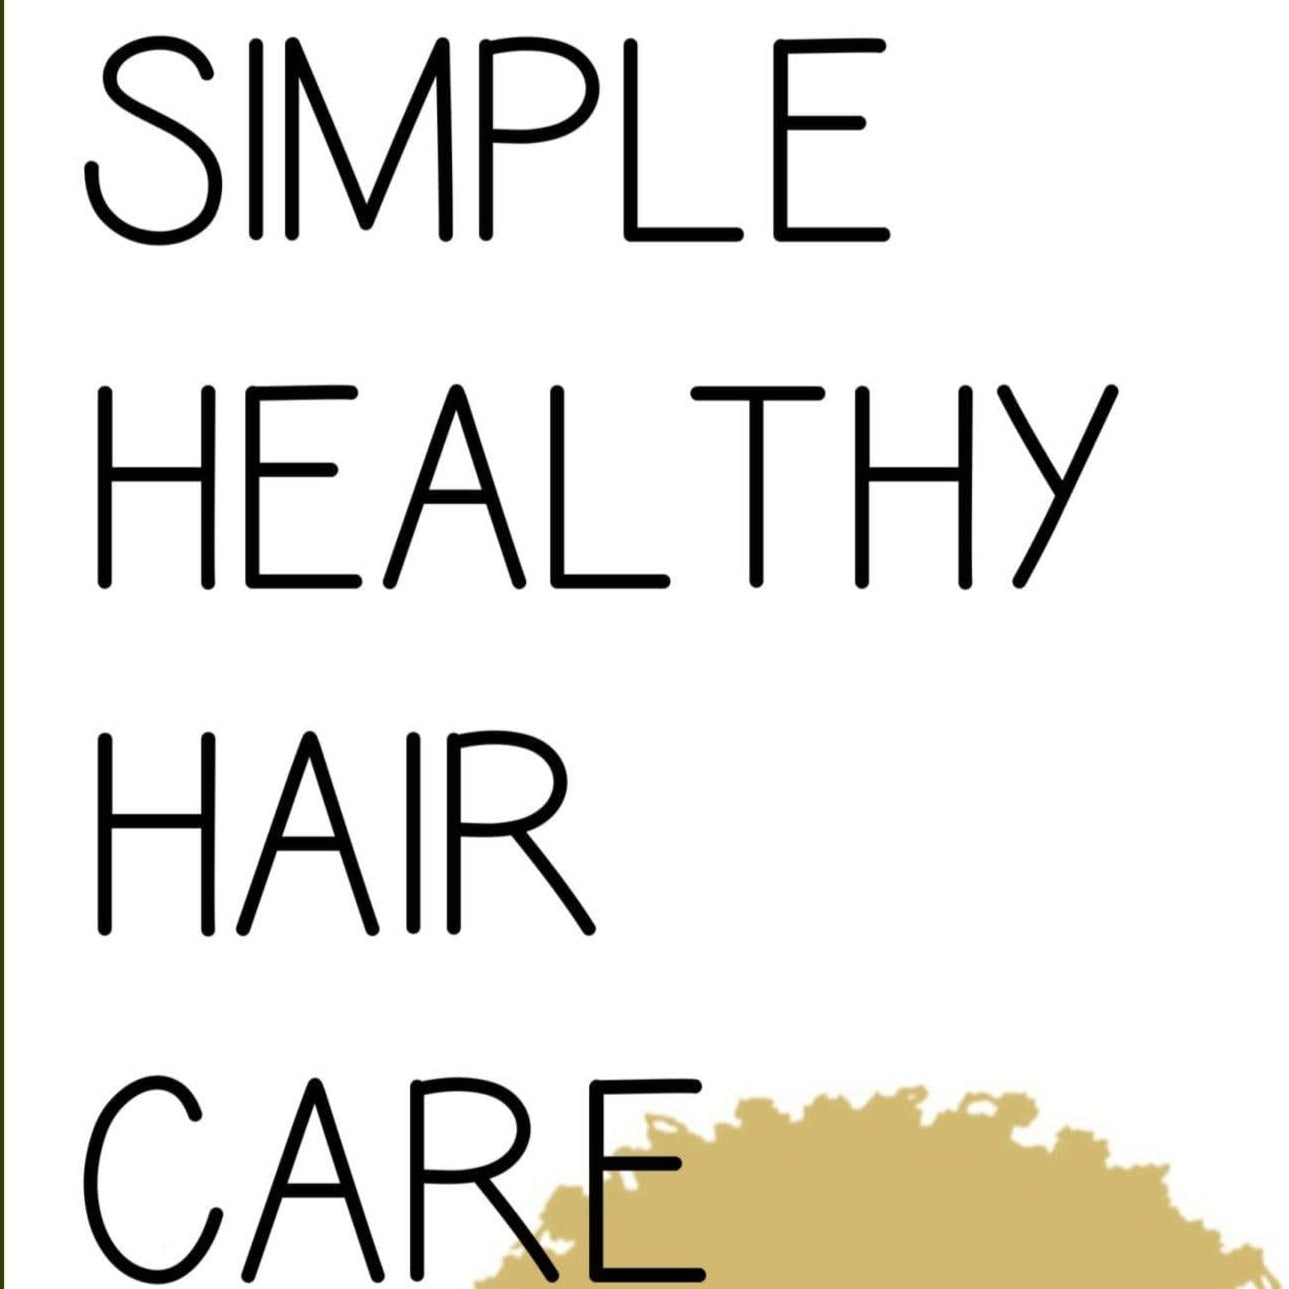 Simple Healthy Haircare - Ebook - kiyacosmetics ebook